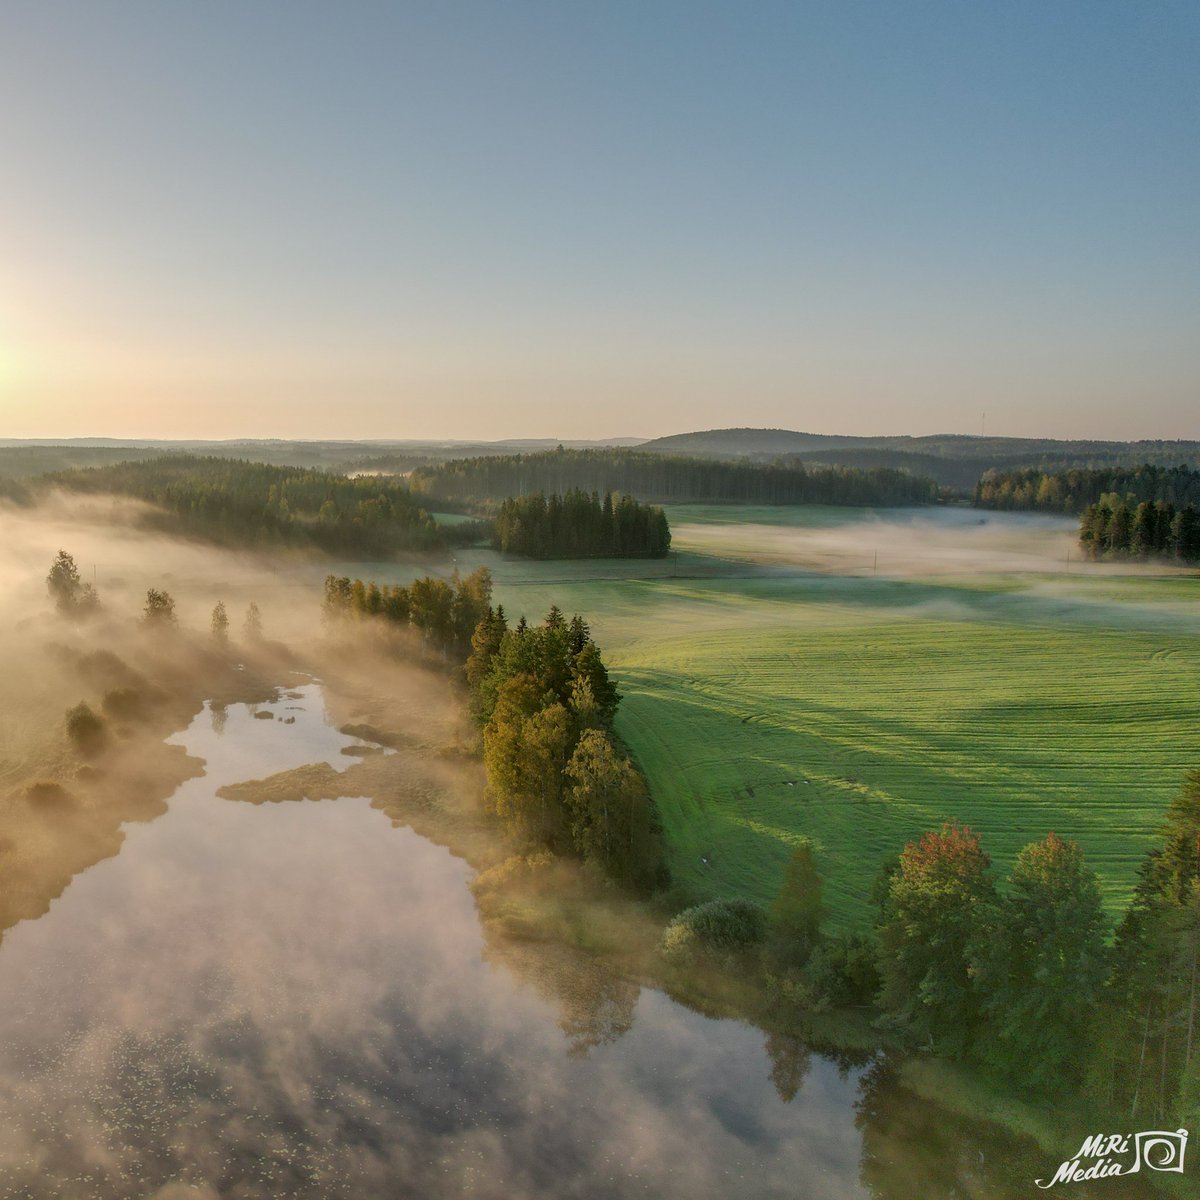 Morning views 🇫🇮 #mirimedia #kuopio #muuruvesi #dronepilot #goodmorning #air2s #landscape #landscapephotography #discoverfinland #discoveringfinland